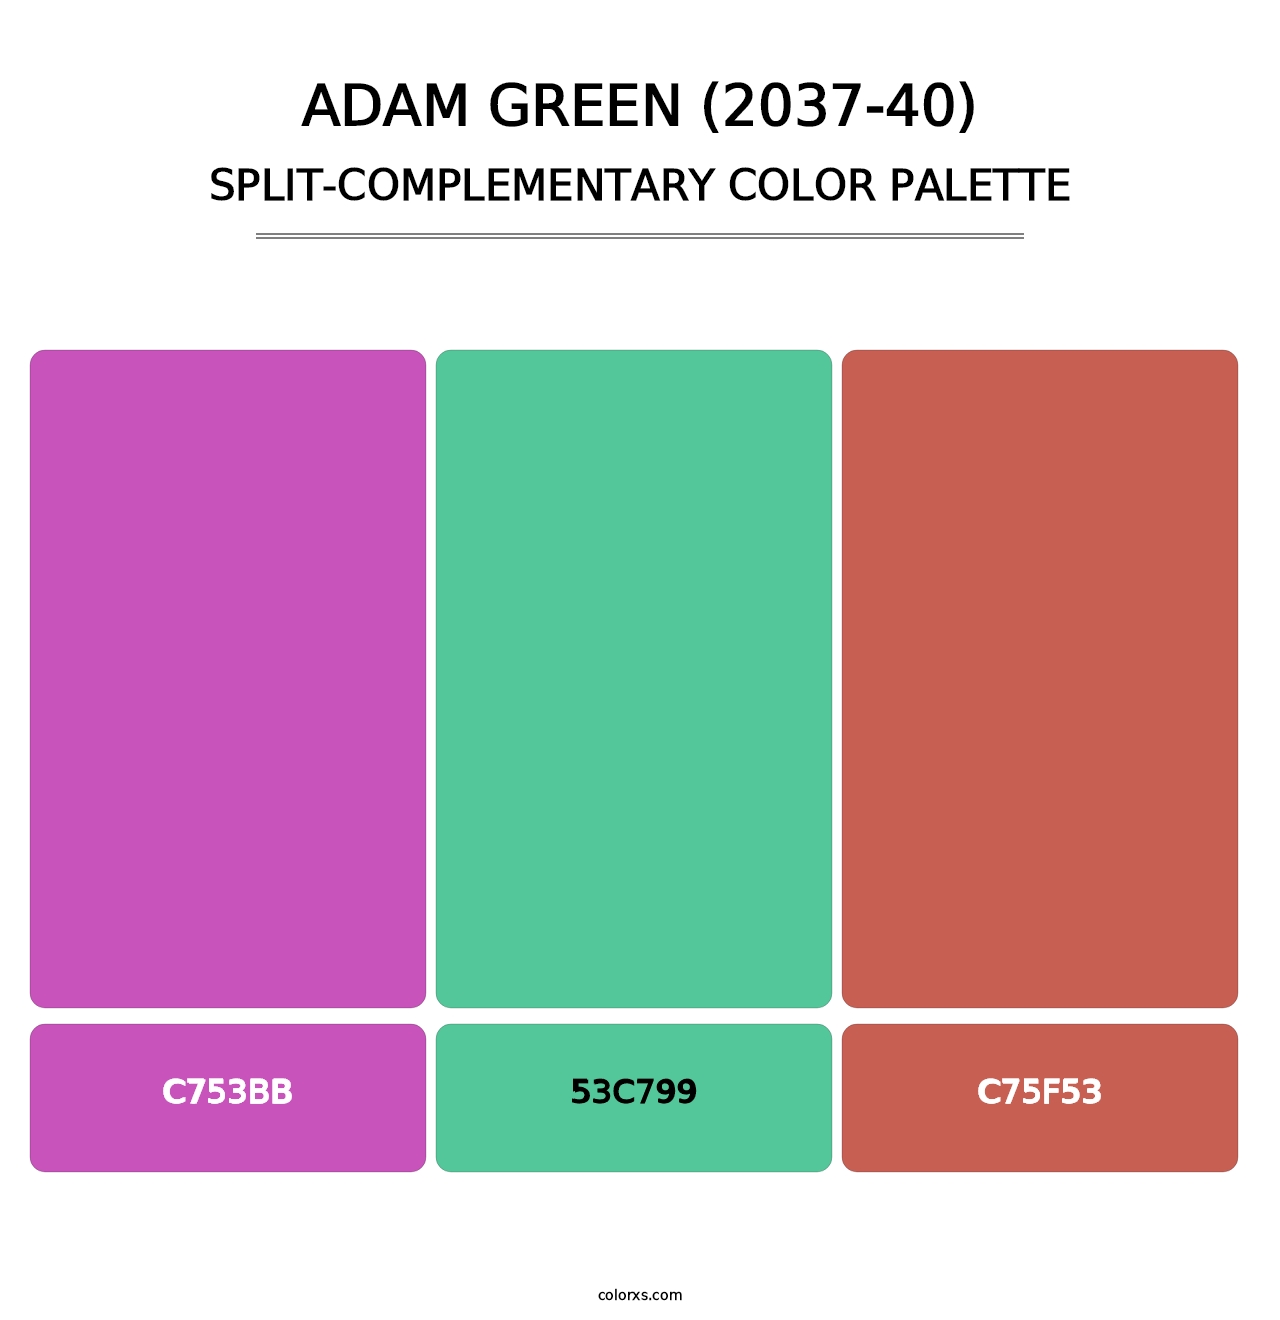 Adam Green (2037-40) - Split-Complementary Color Palette